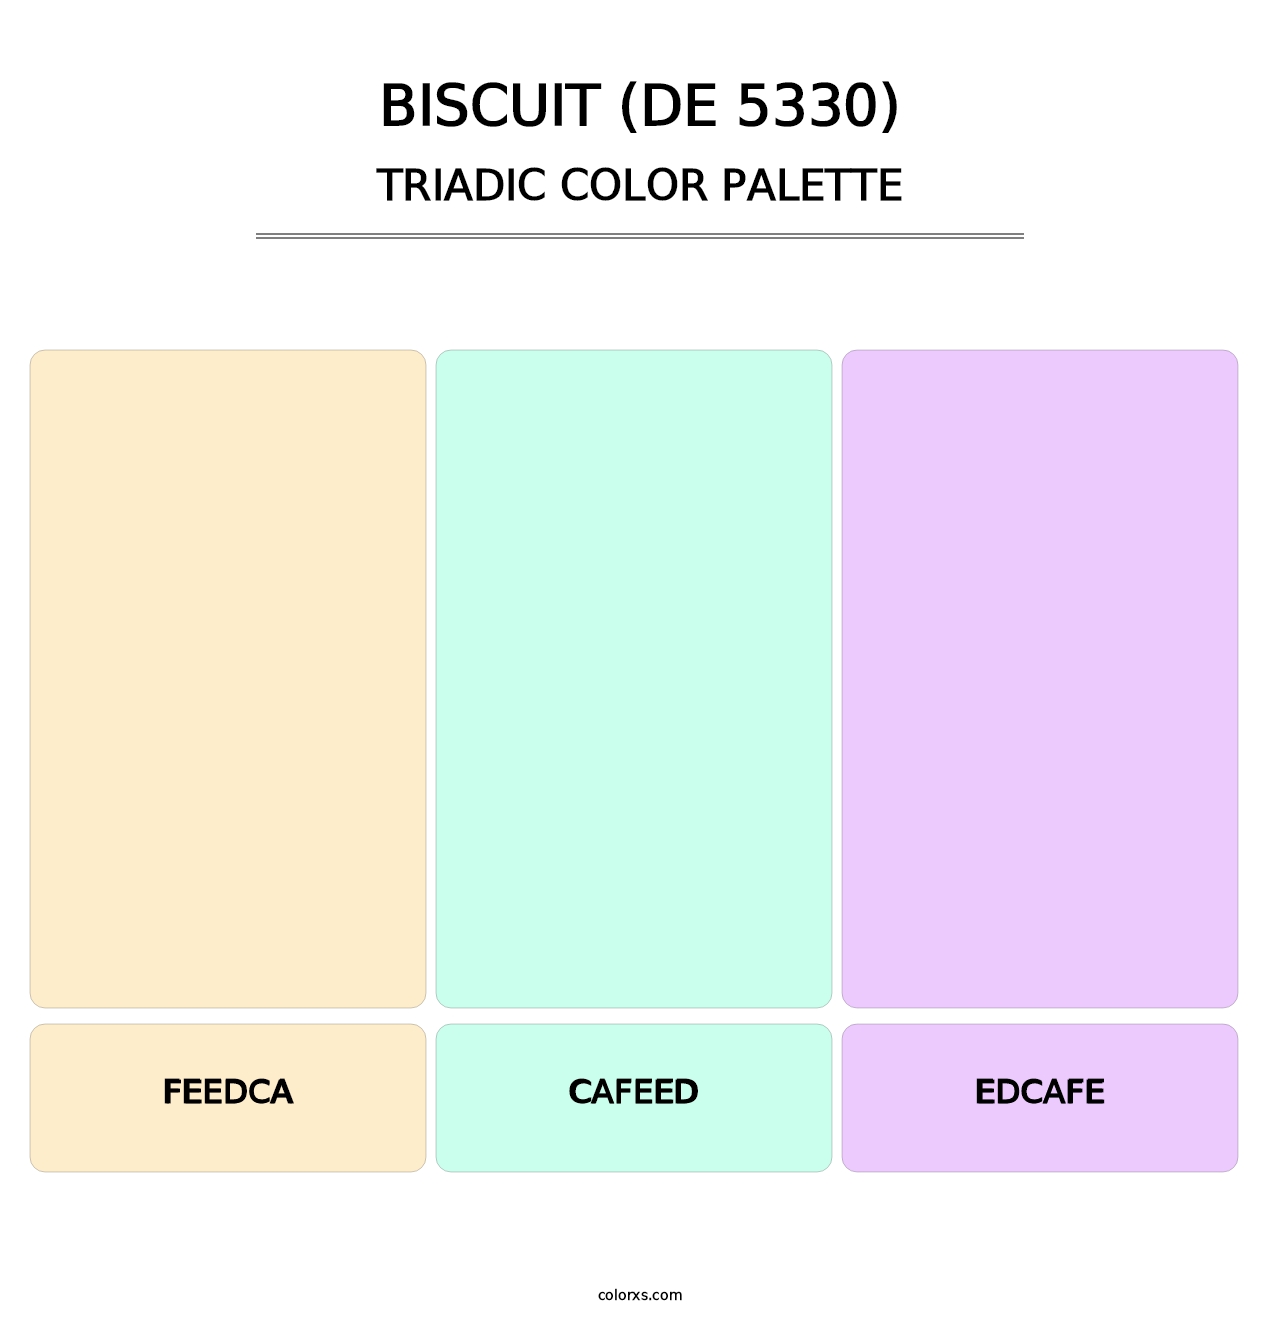 Biscuit (DE 5330) - Triadic Color Palette